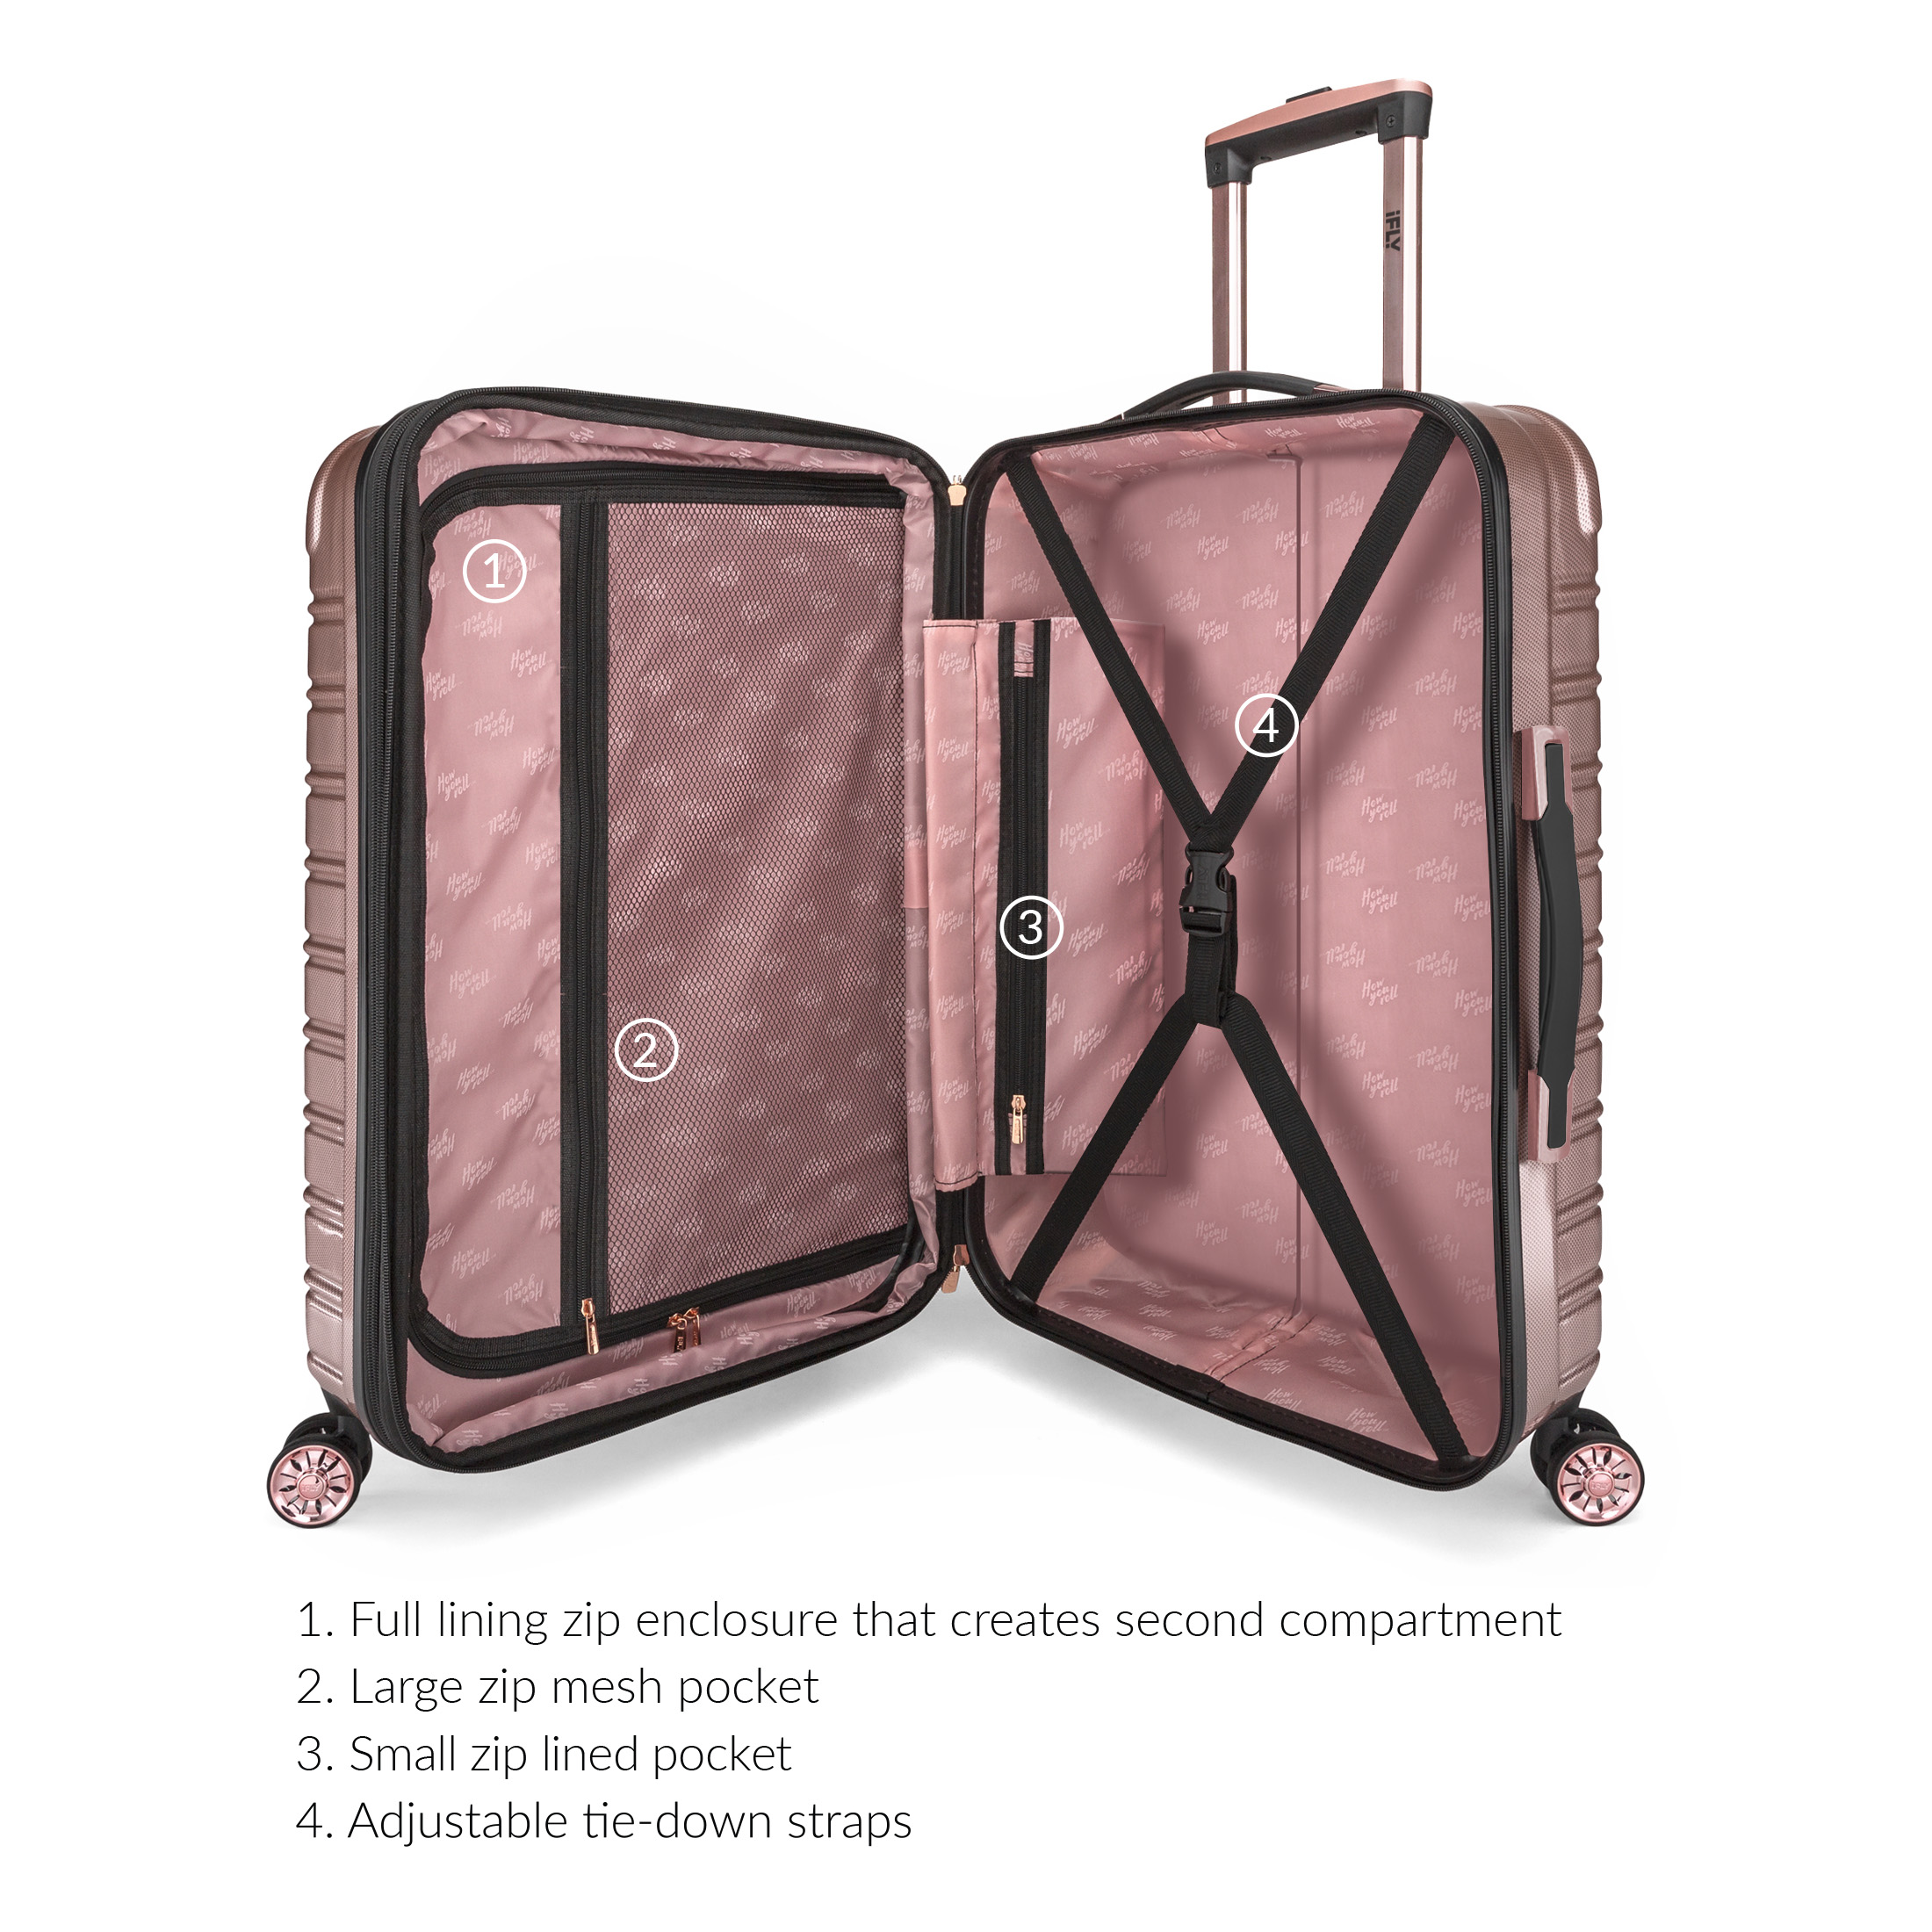 iFLY Hardside Luggage Fibertech 3 Piece Set, 20" Carry-on Luggage, 24" Checked Luggage and 28" Checked Luggage, Rose Gold - image 4 of 12